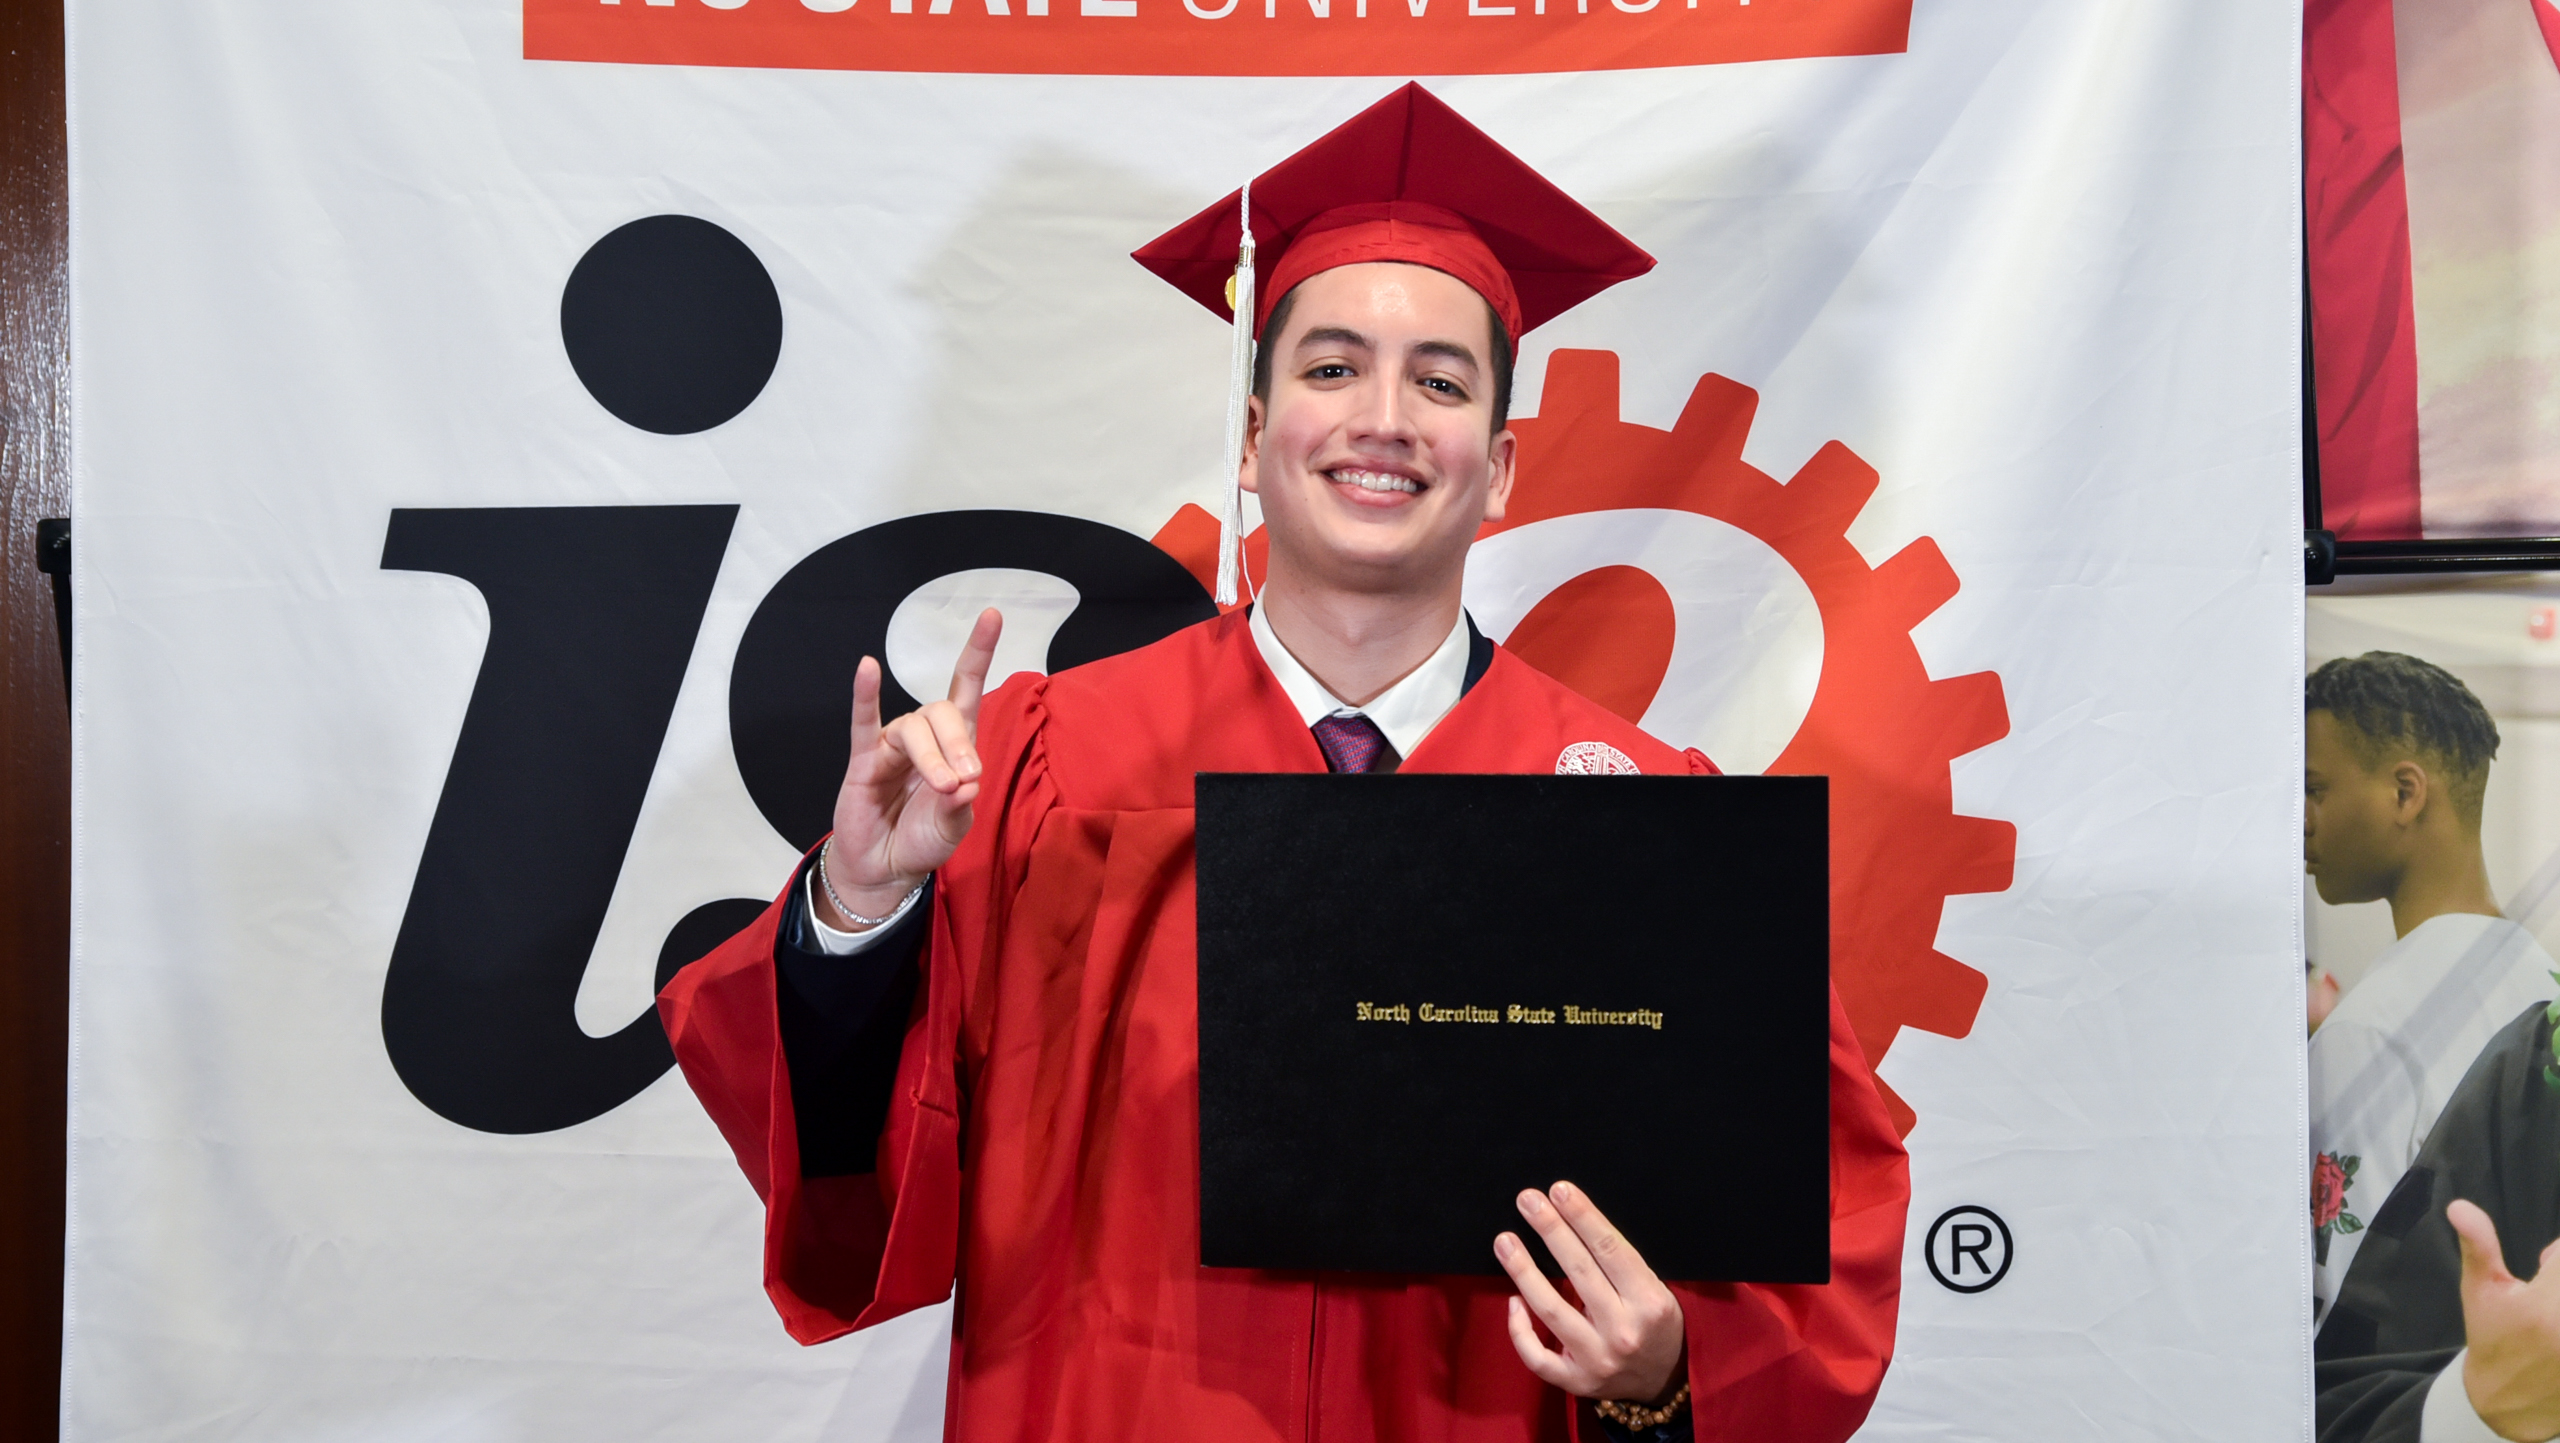 fall 2020 graduation | undergraduates